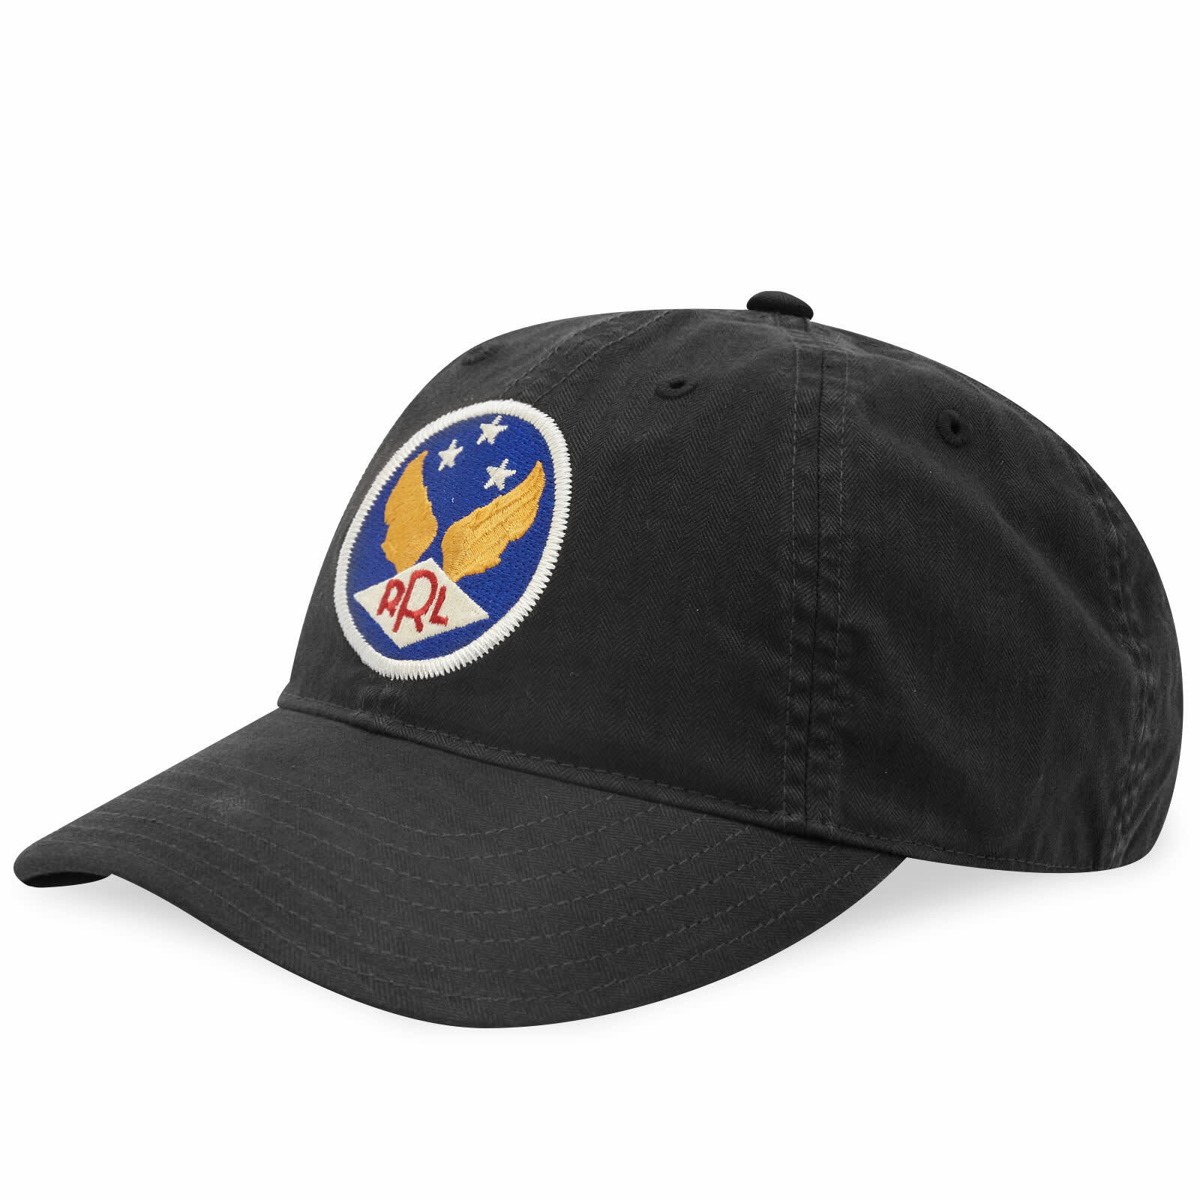 RRL Men's Trucker Hat in Black RRL